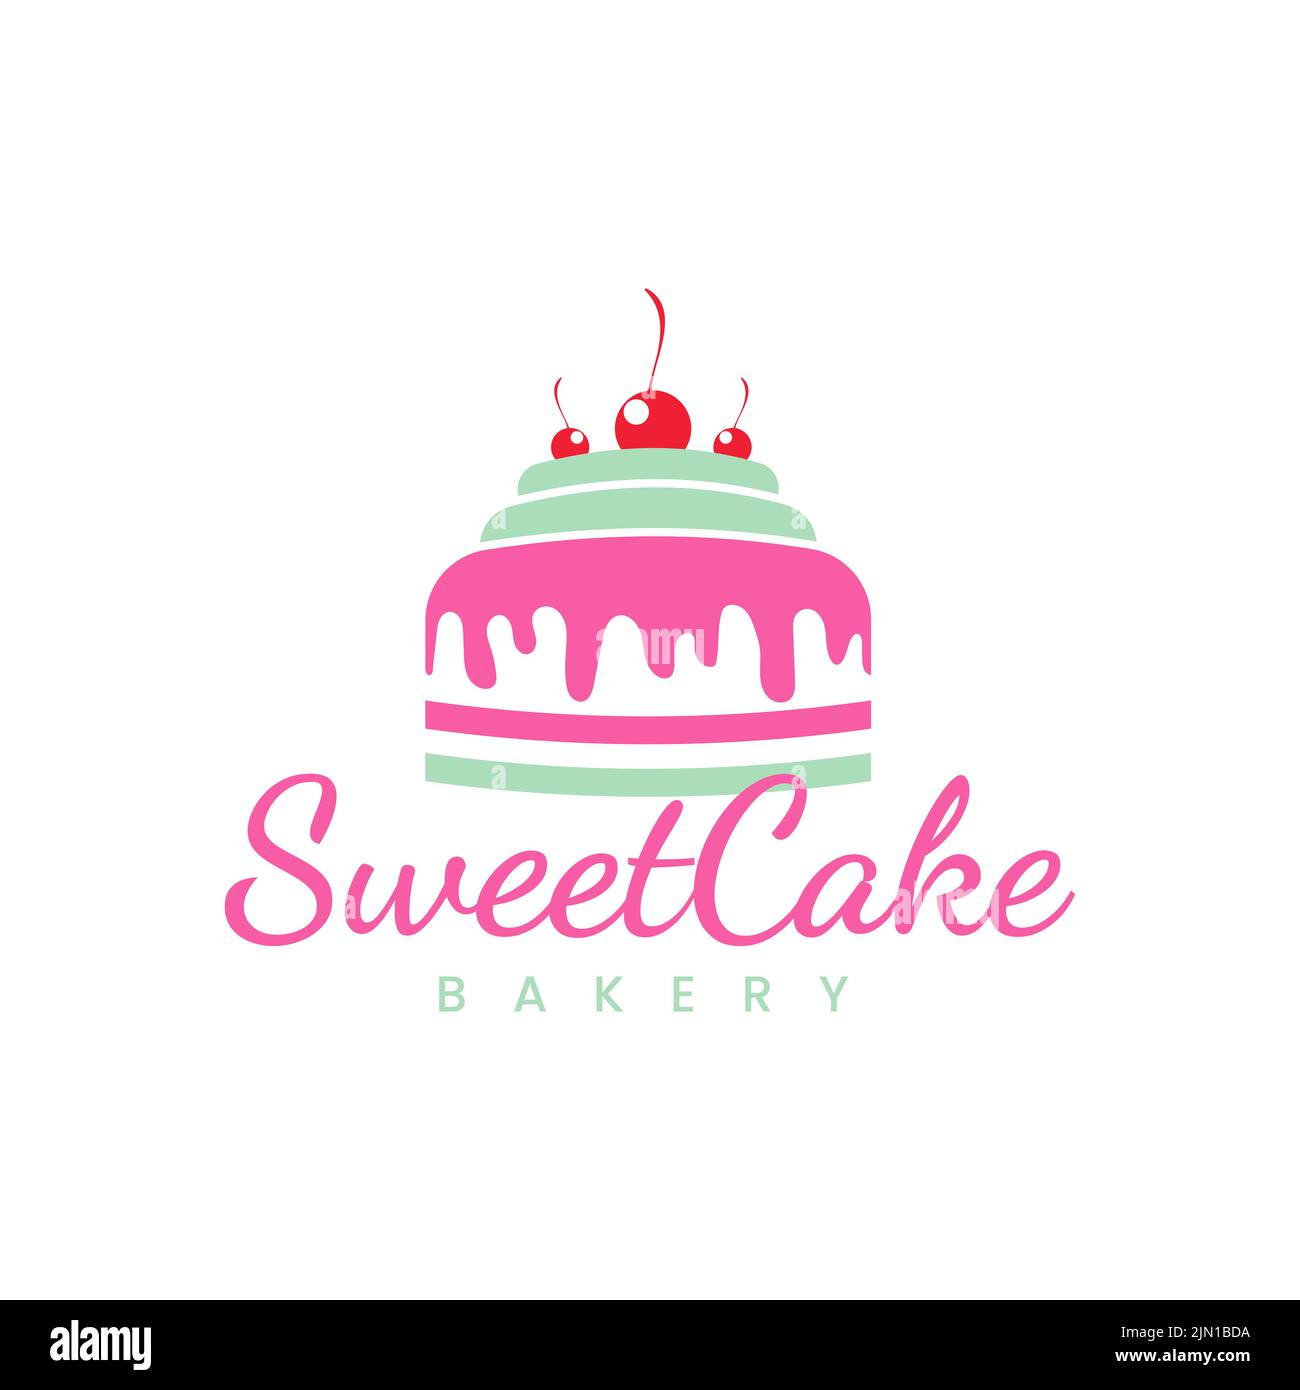 Check out this Modern, Elegant Logo Design for Cakes with Love | Design:  #18929771, Designer: ilovedesign1, Ta… | Cake logo design, Bakery logo  design, Cupcake logo